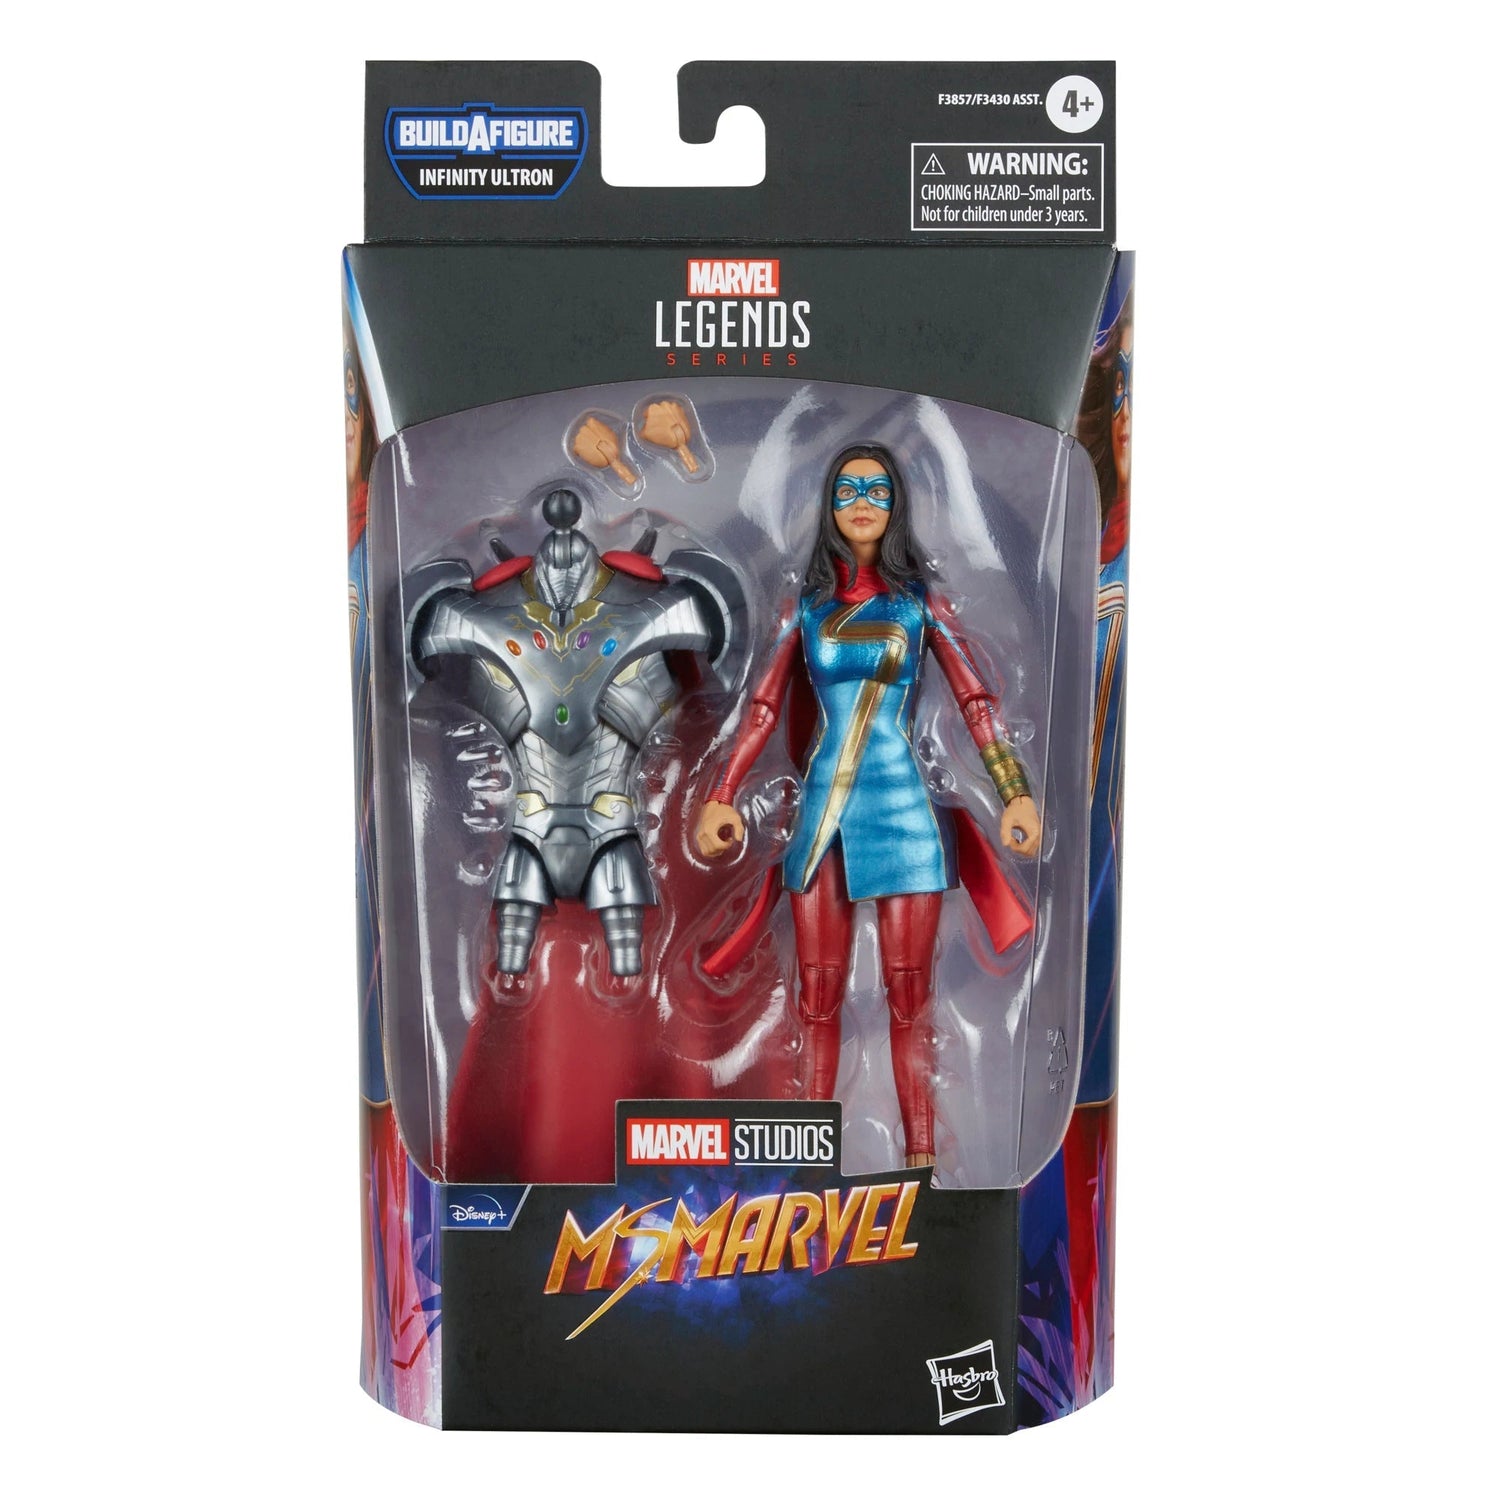 Marvel Legends Series Disney Plus Ms. Marvel Hasbro No Protector Case